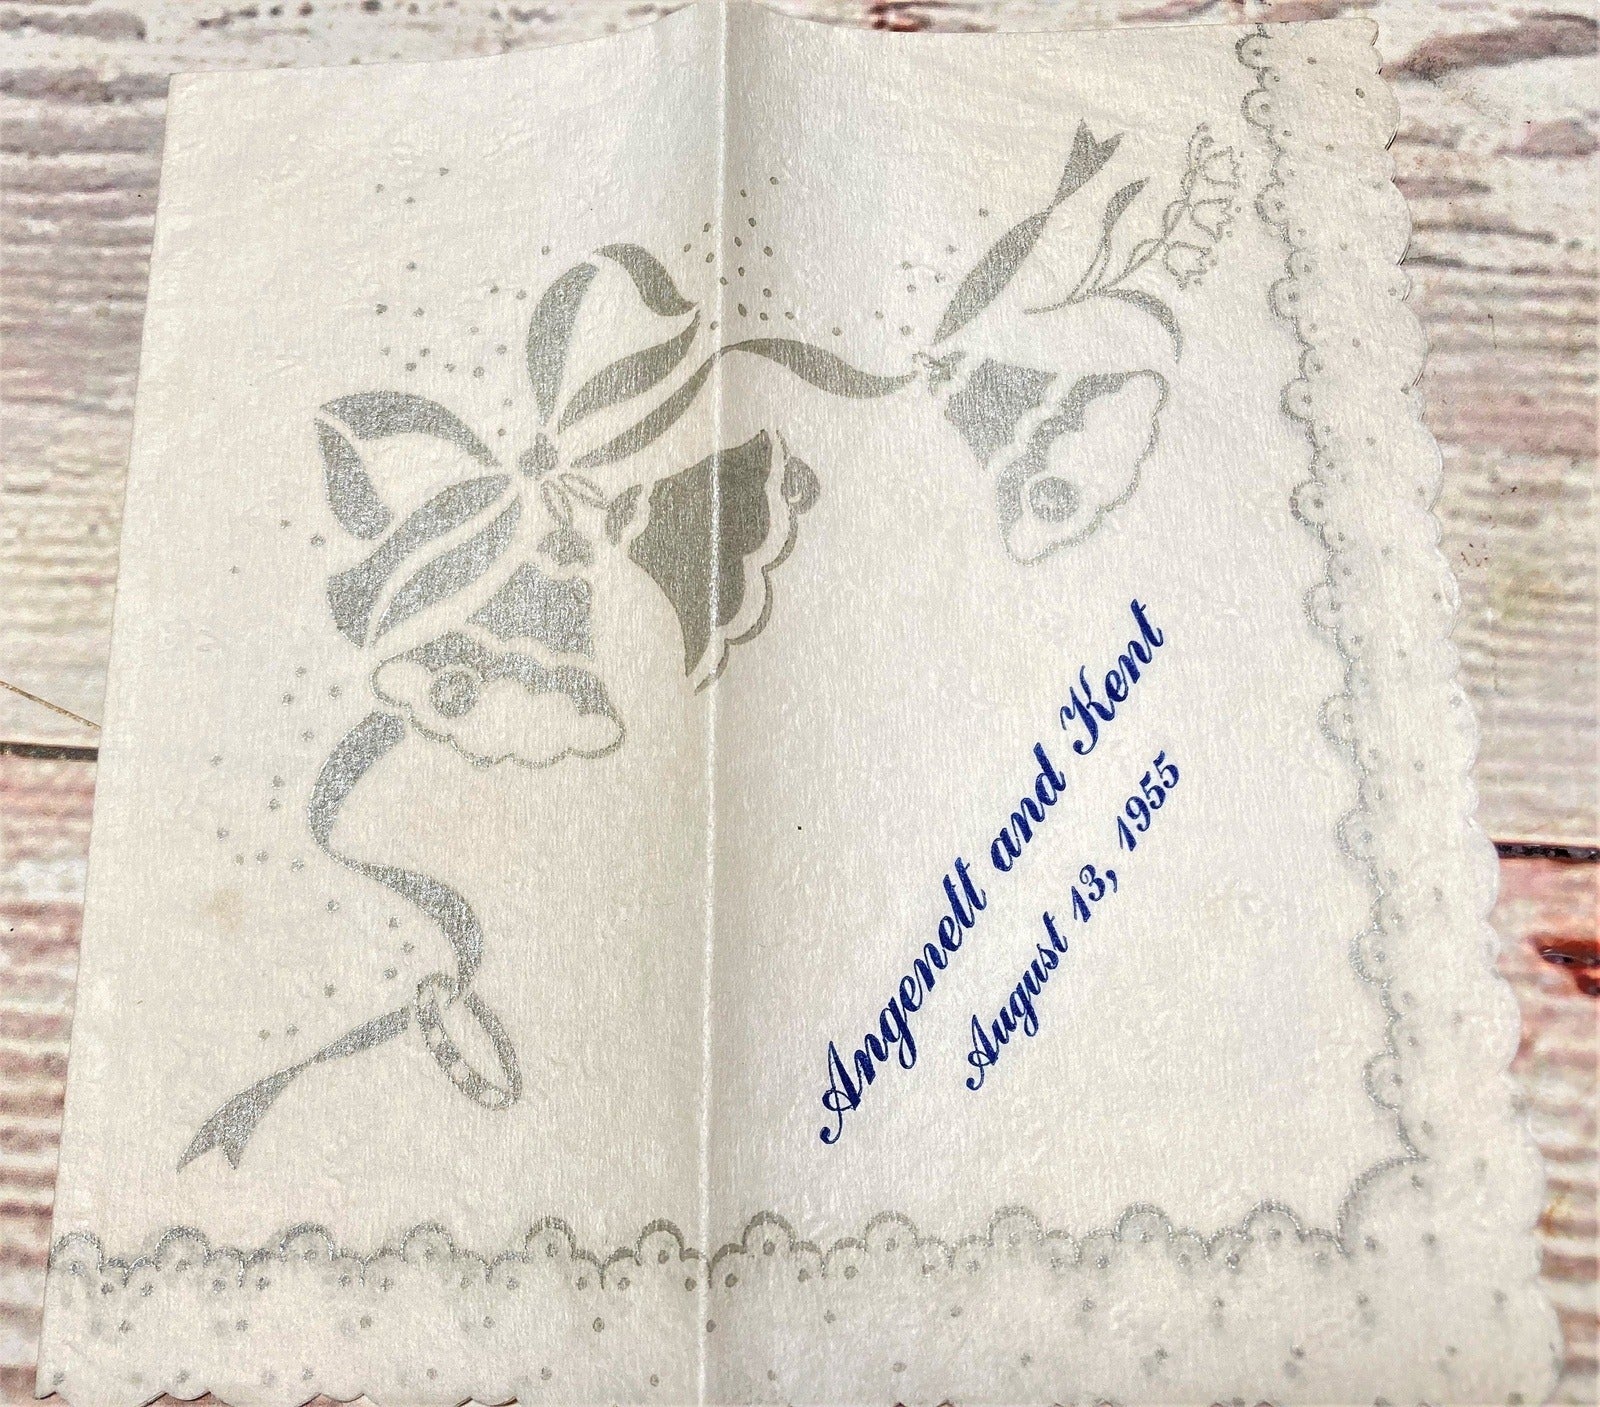 Vintage 25th Anniversary Greeting Cards, Silver & Gold Anniversary, Ephemera Lot, Junk Journal Supplies - set of 4 + 1 napkin